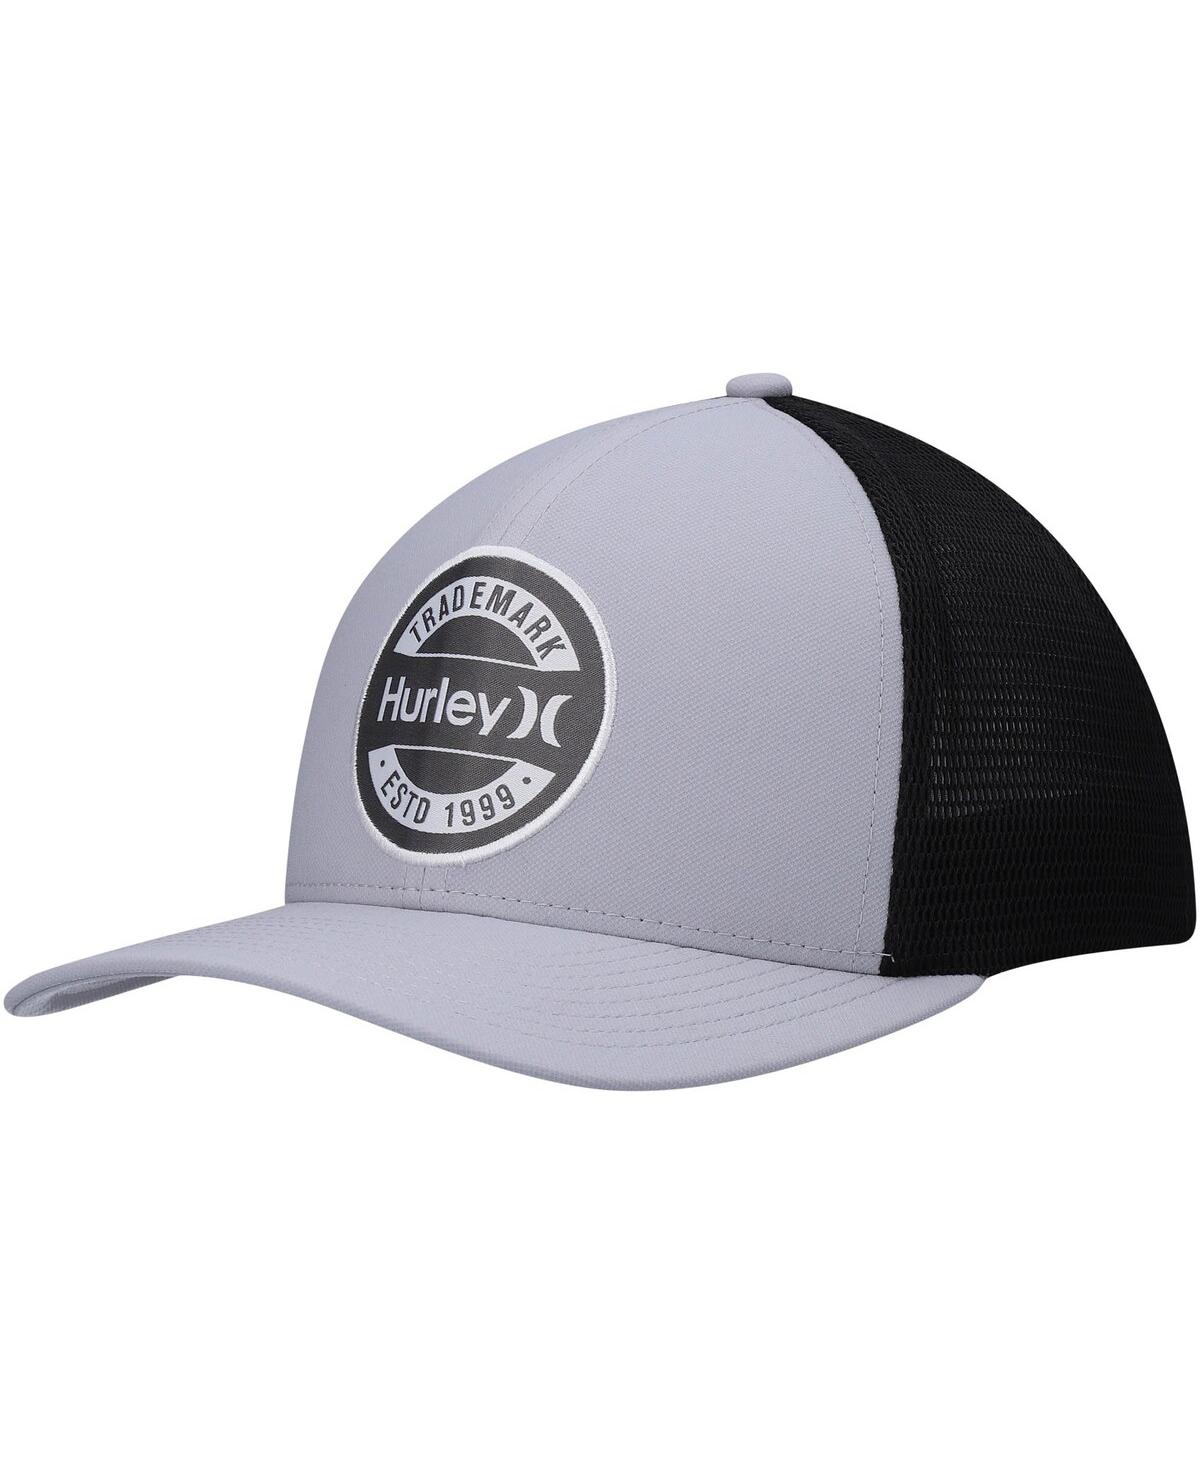 Men's Hurley Gray Charter Trucker Snapback Hat - Gray